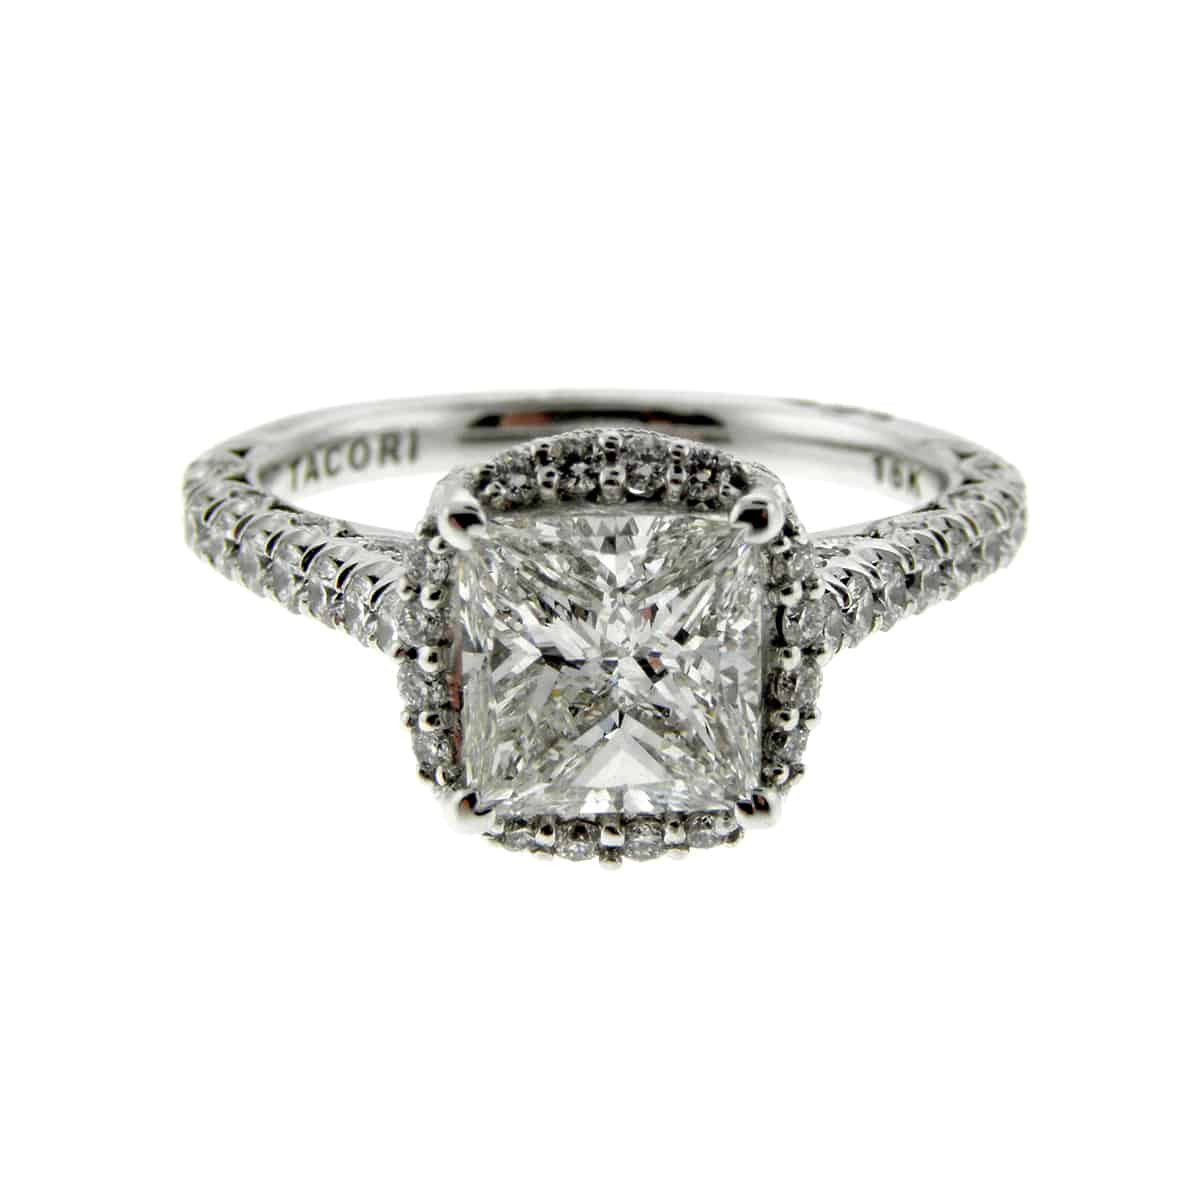 Tacori Princess Cut Engagement Rings
 Tacori 1 40ct Princess Cut Diamond 18K White Gold Ring